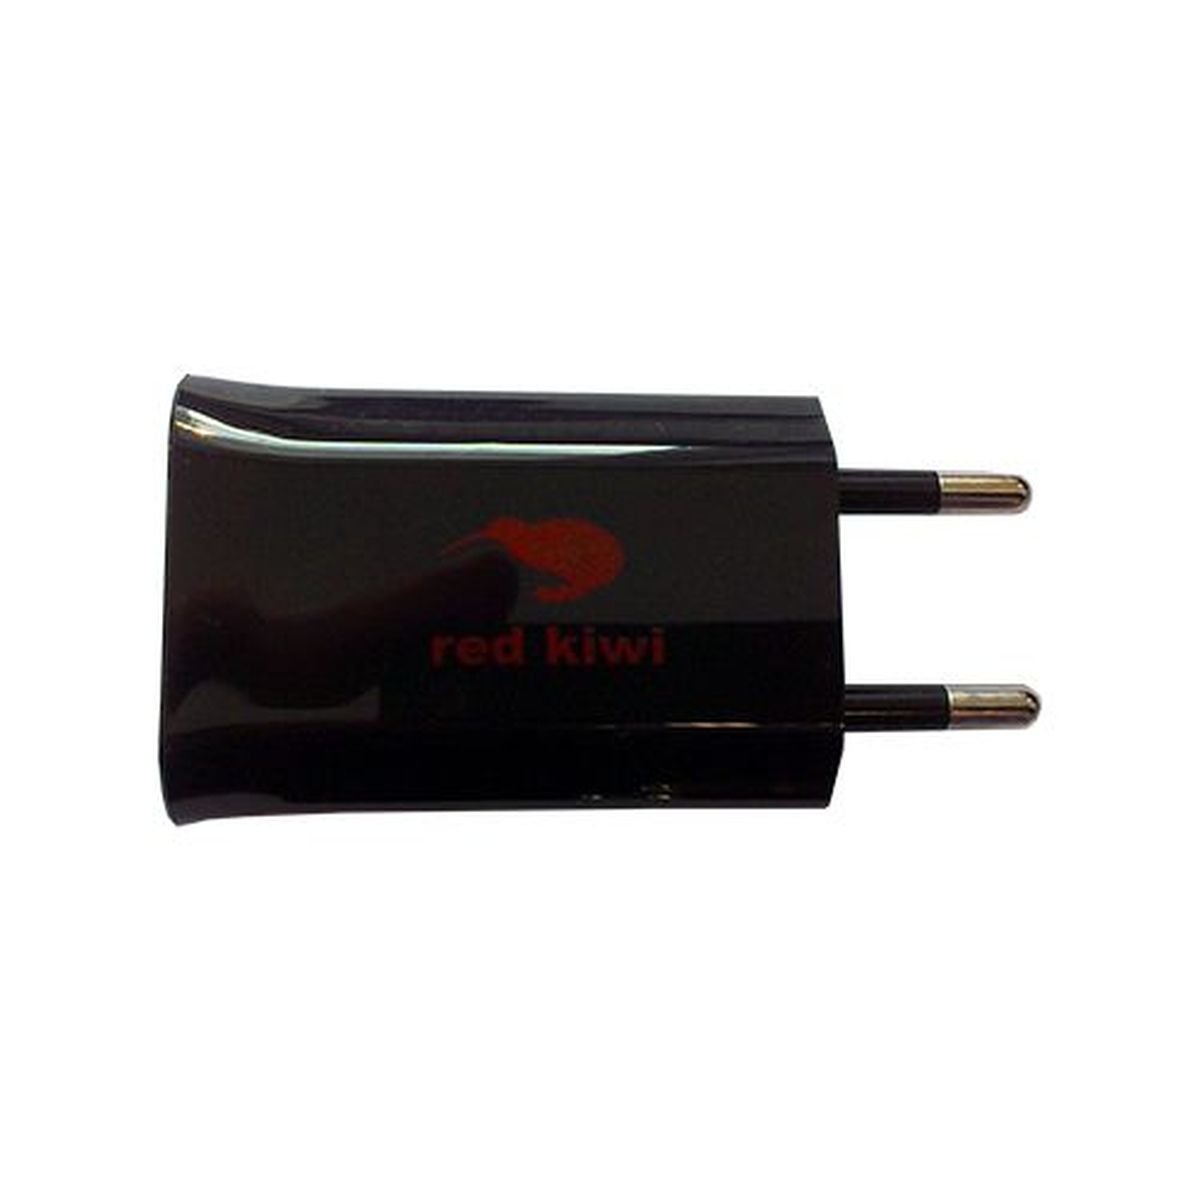 Red Kiwi Red Kiwi USB Stromadapter /Netzladegerät mit USB-Anschluss 220V bei www.Tabakring.de kaufen